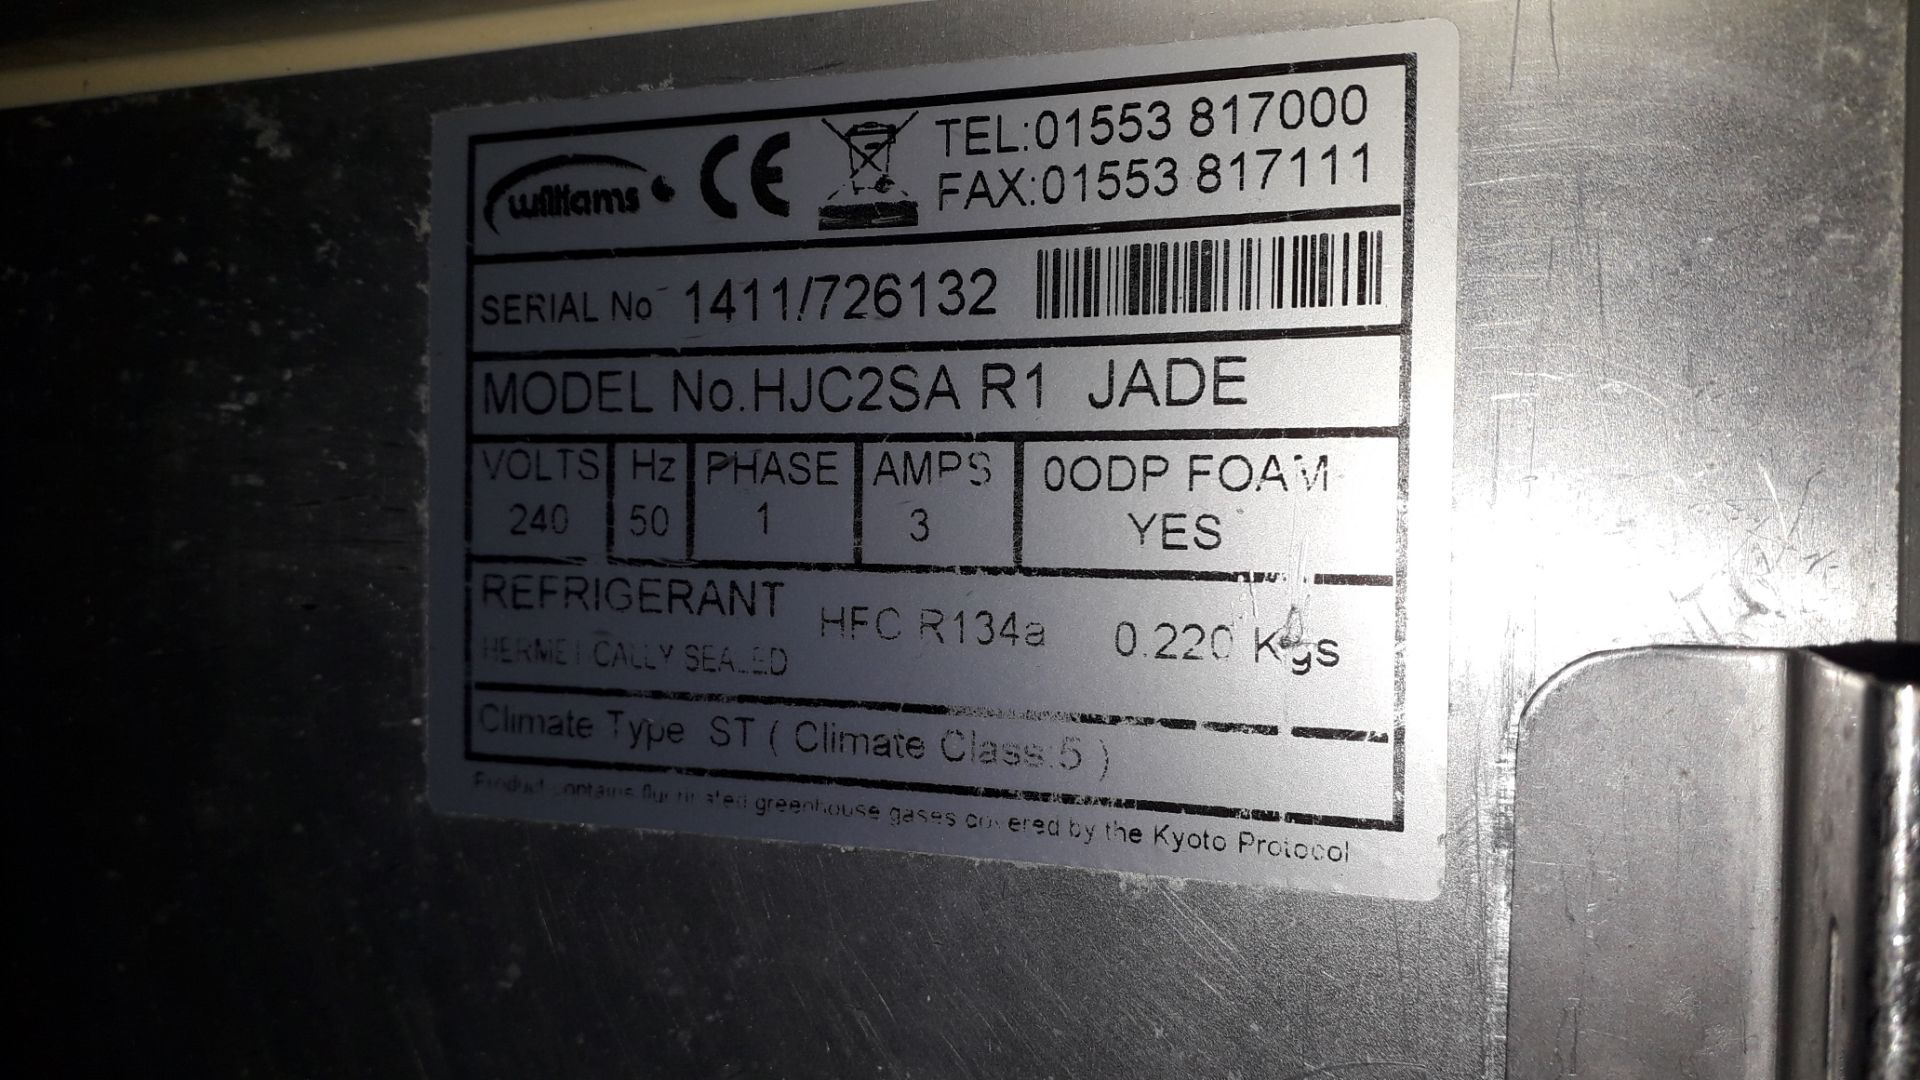 Williams HJC2SAR1JADE Stainless Steel 2 Door Undercounter Refrigerator Serial Number 1411-726132 - Image 3 of 3